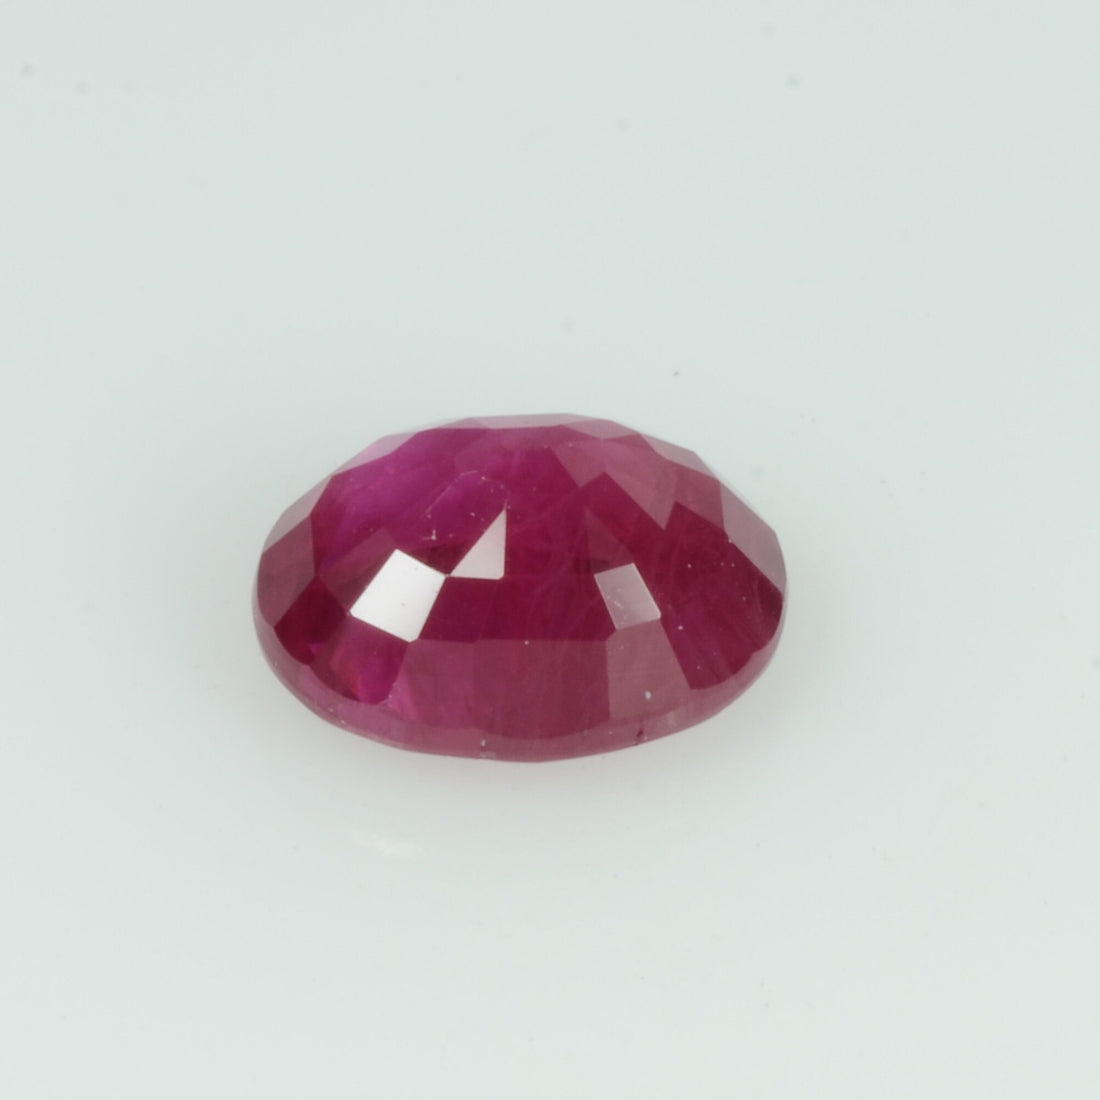 0.94 Cts Natural Burma Ruby Loose Gemstone Oval Cut